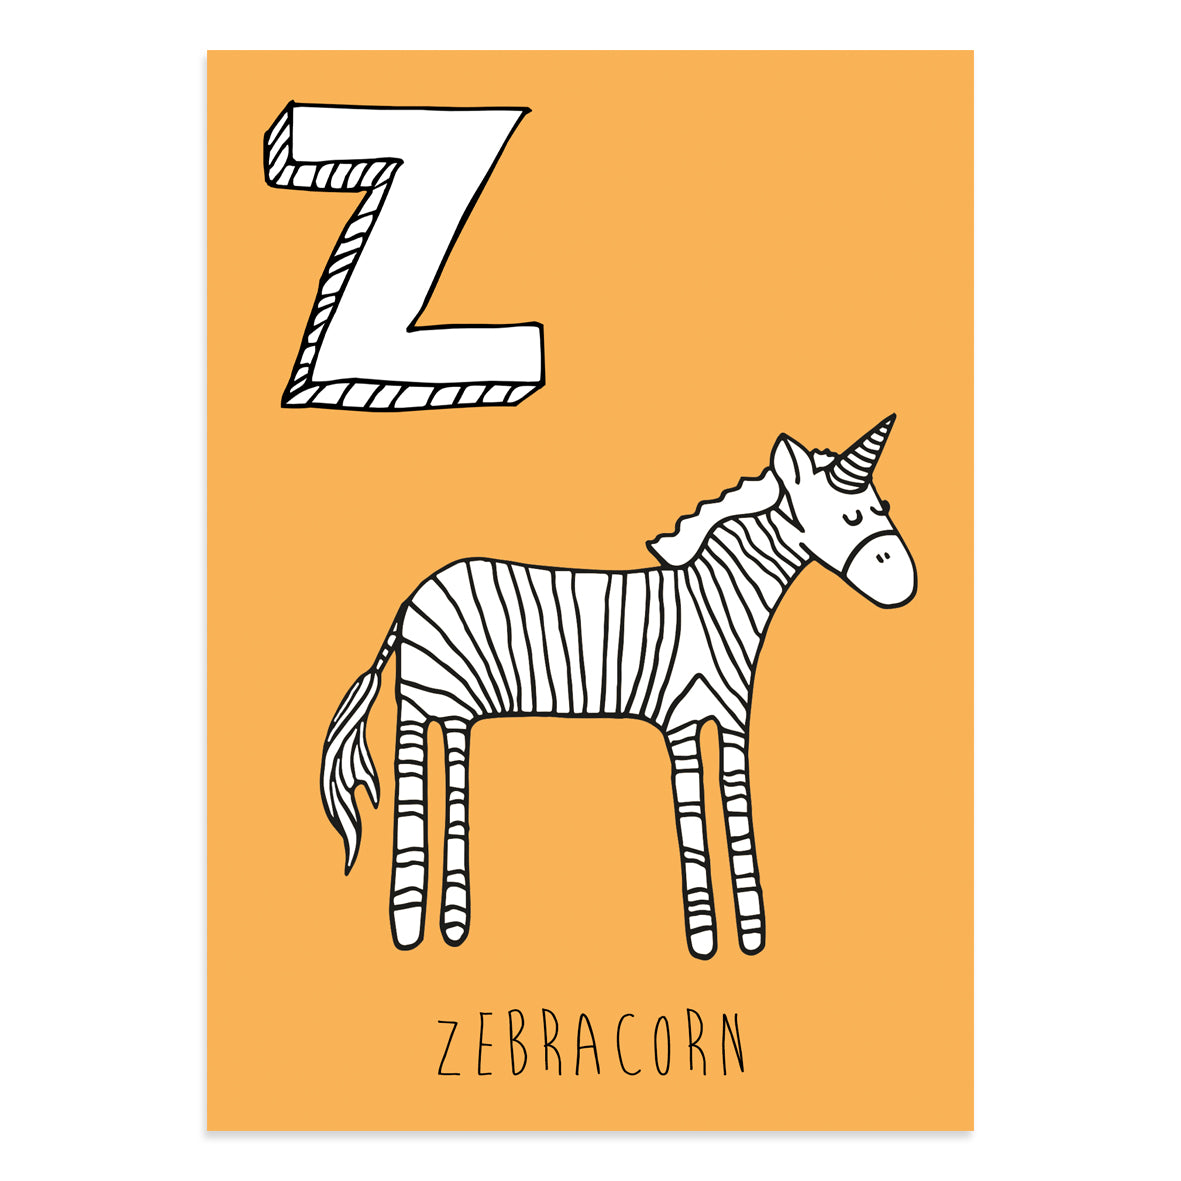 Unicorn postcard featuring the letter Z for zebracorn